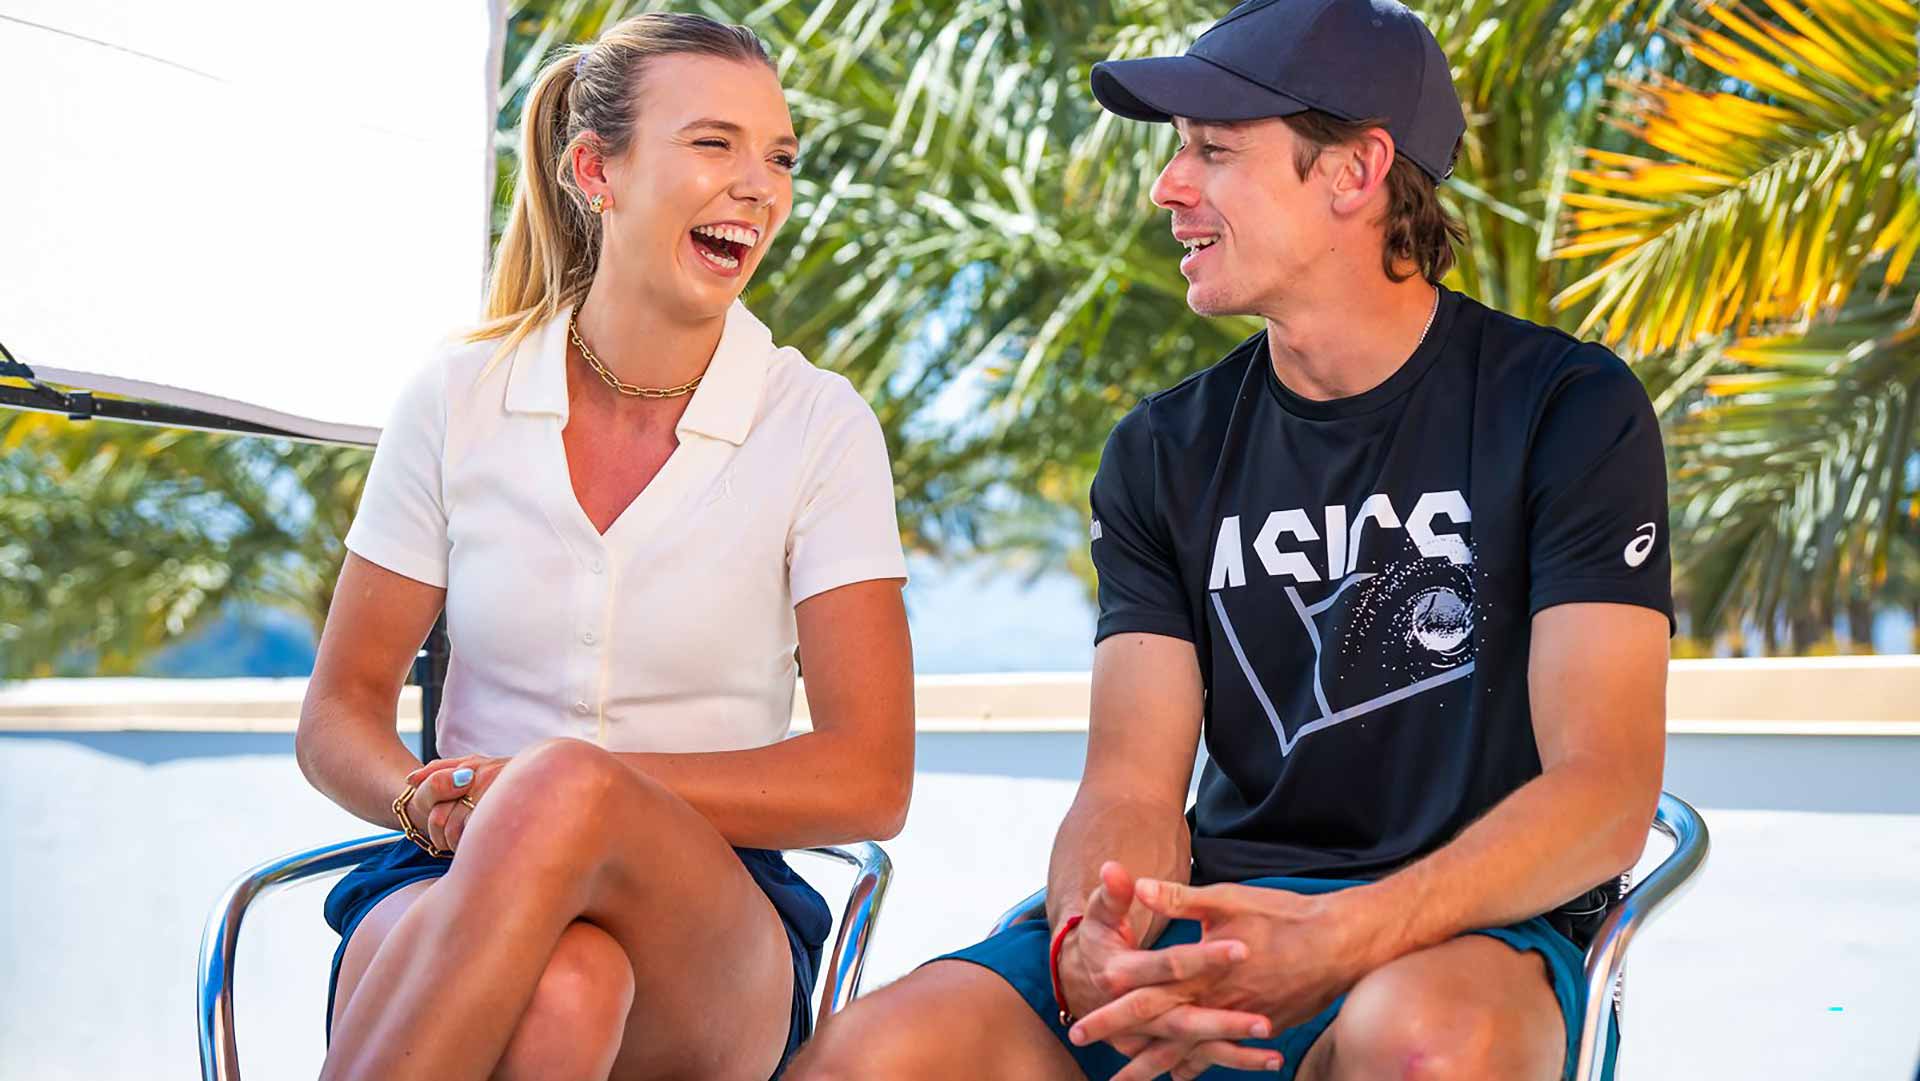 Katie Boulter y Alex De Miñaur se unen en 'Tennis Paradise' después del 'Fin de semana perfecto' |  gira ATP